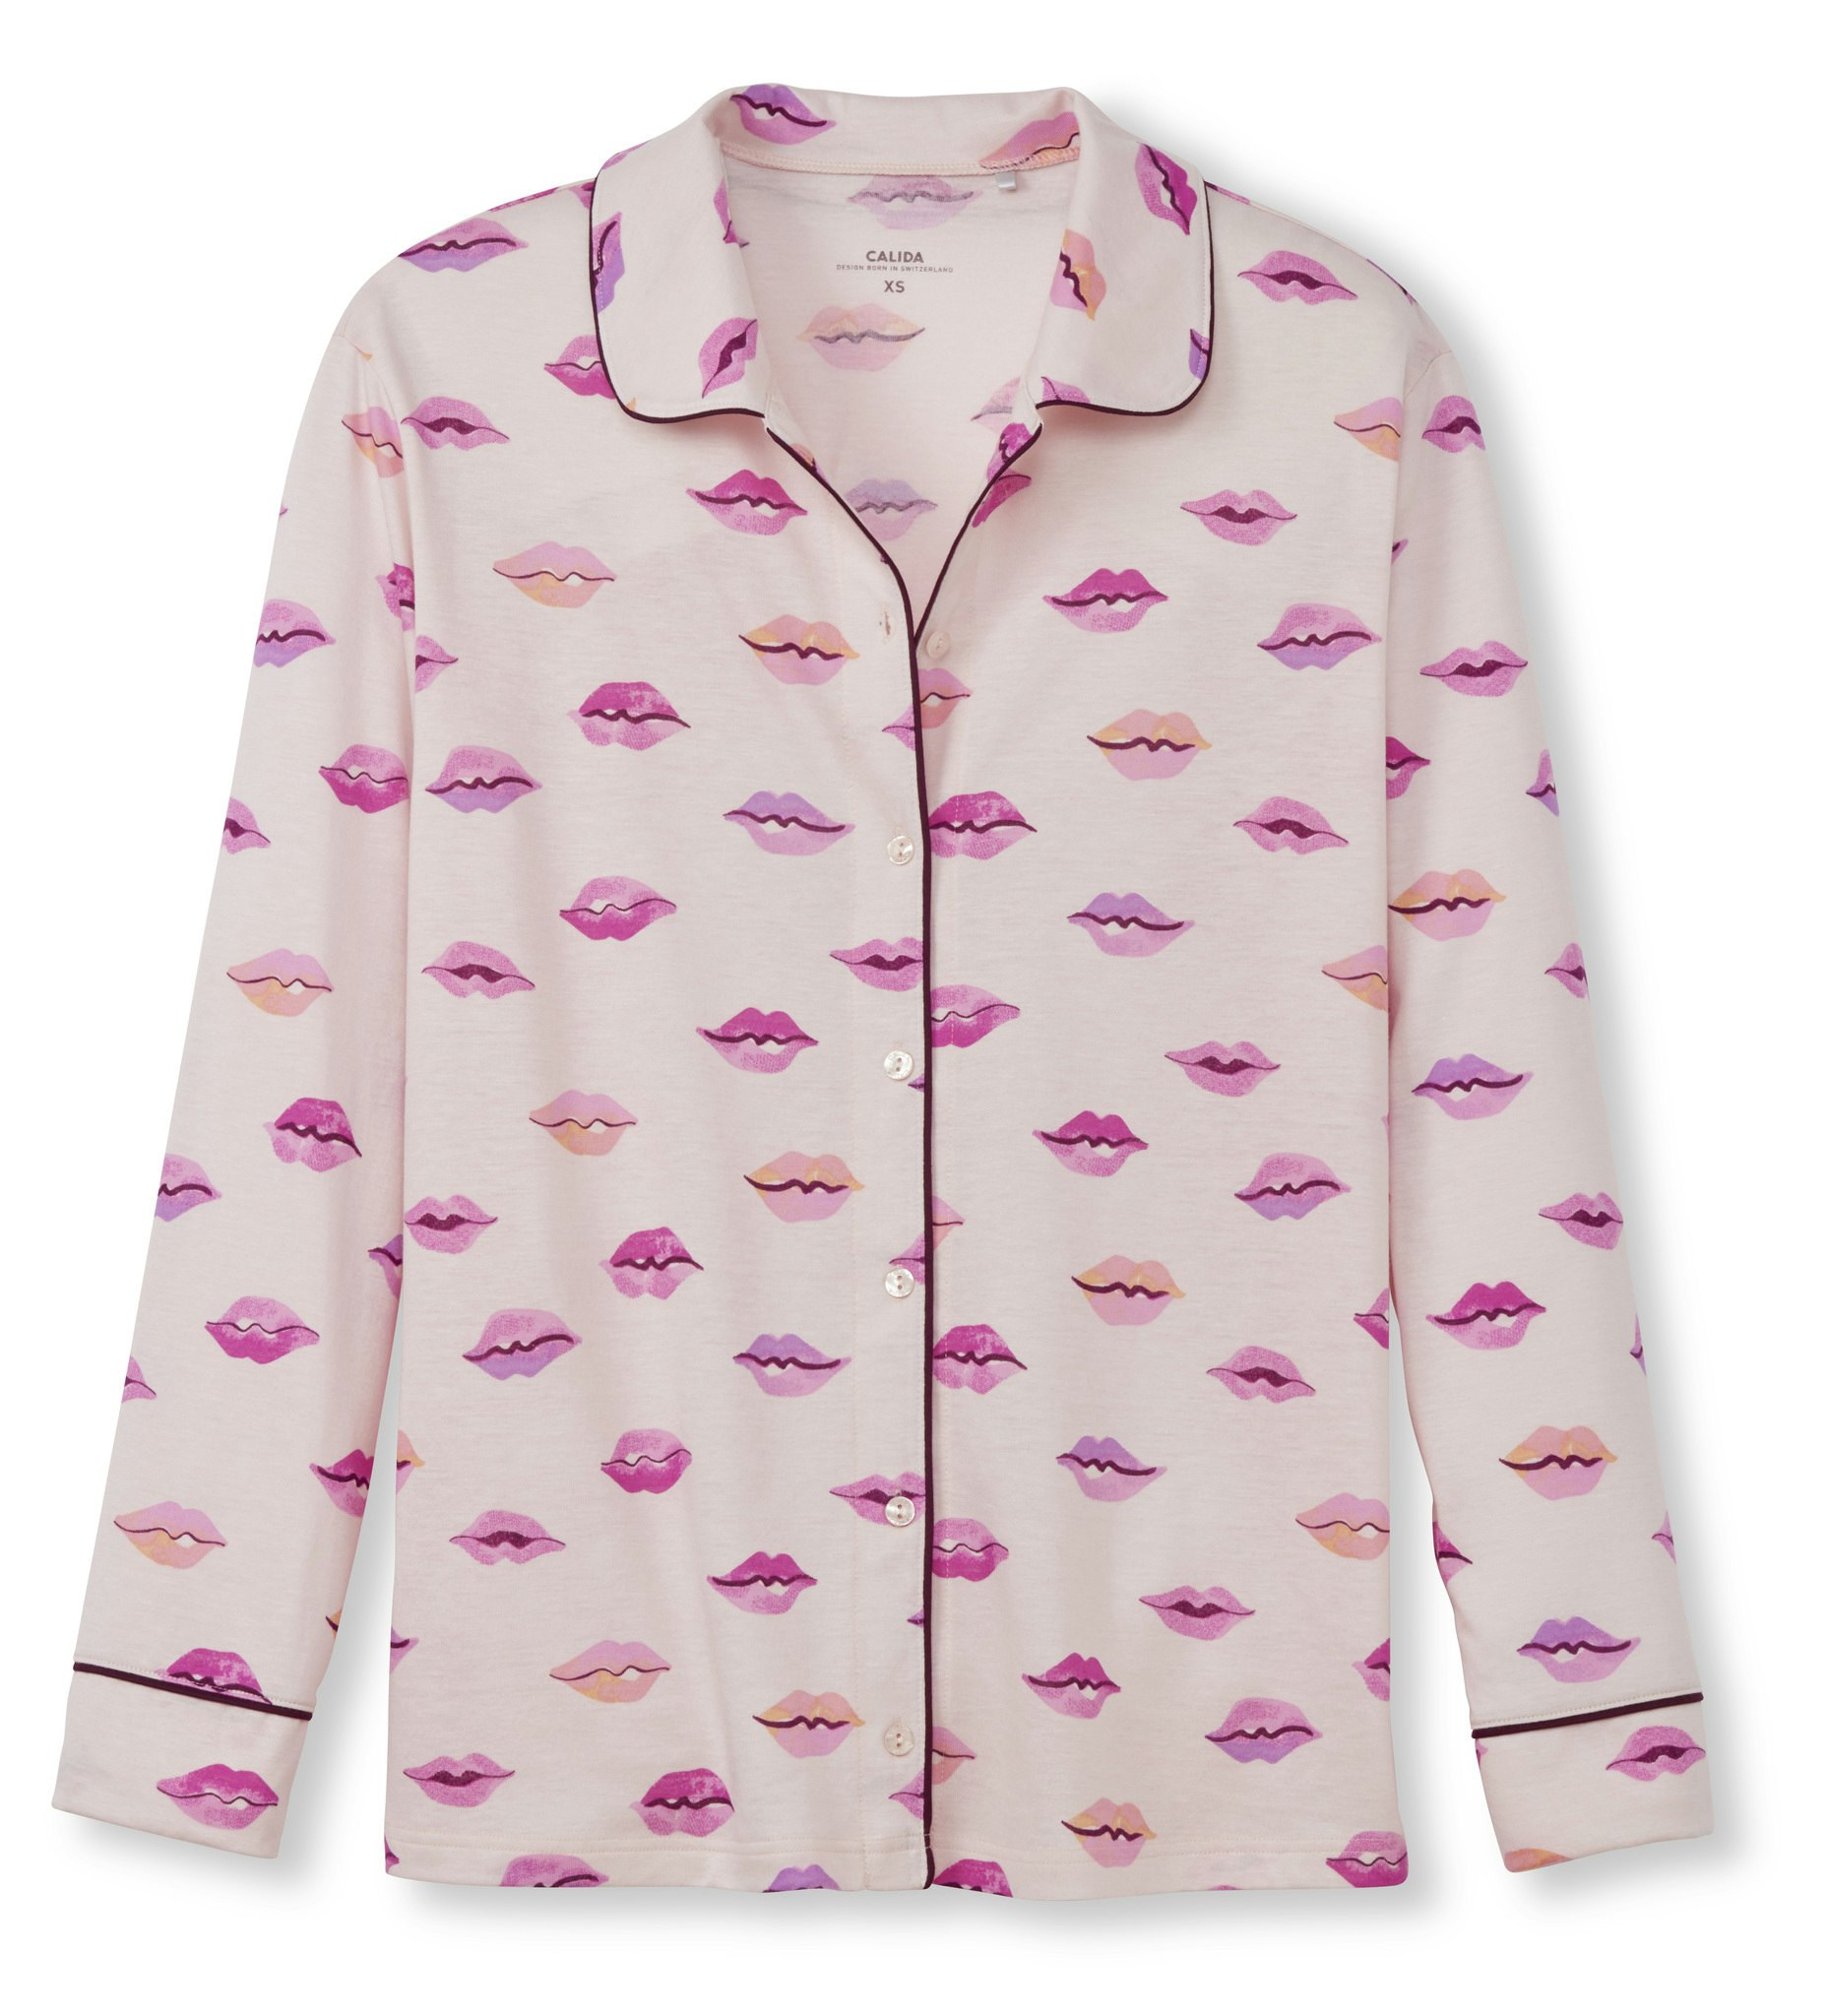 Calida pyjamas jacka favourites kiss 15796 072 pearl blush